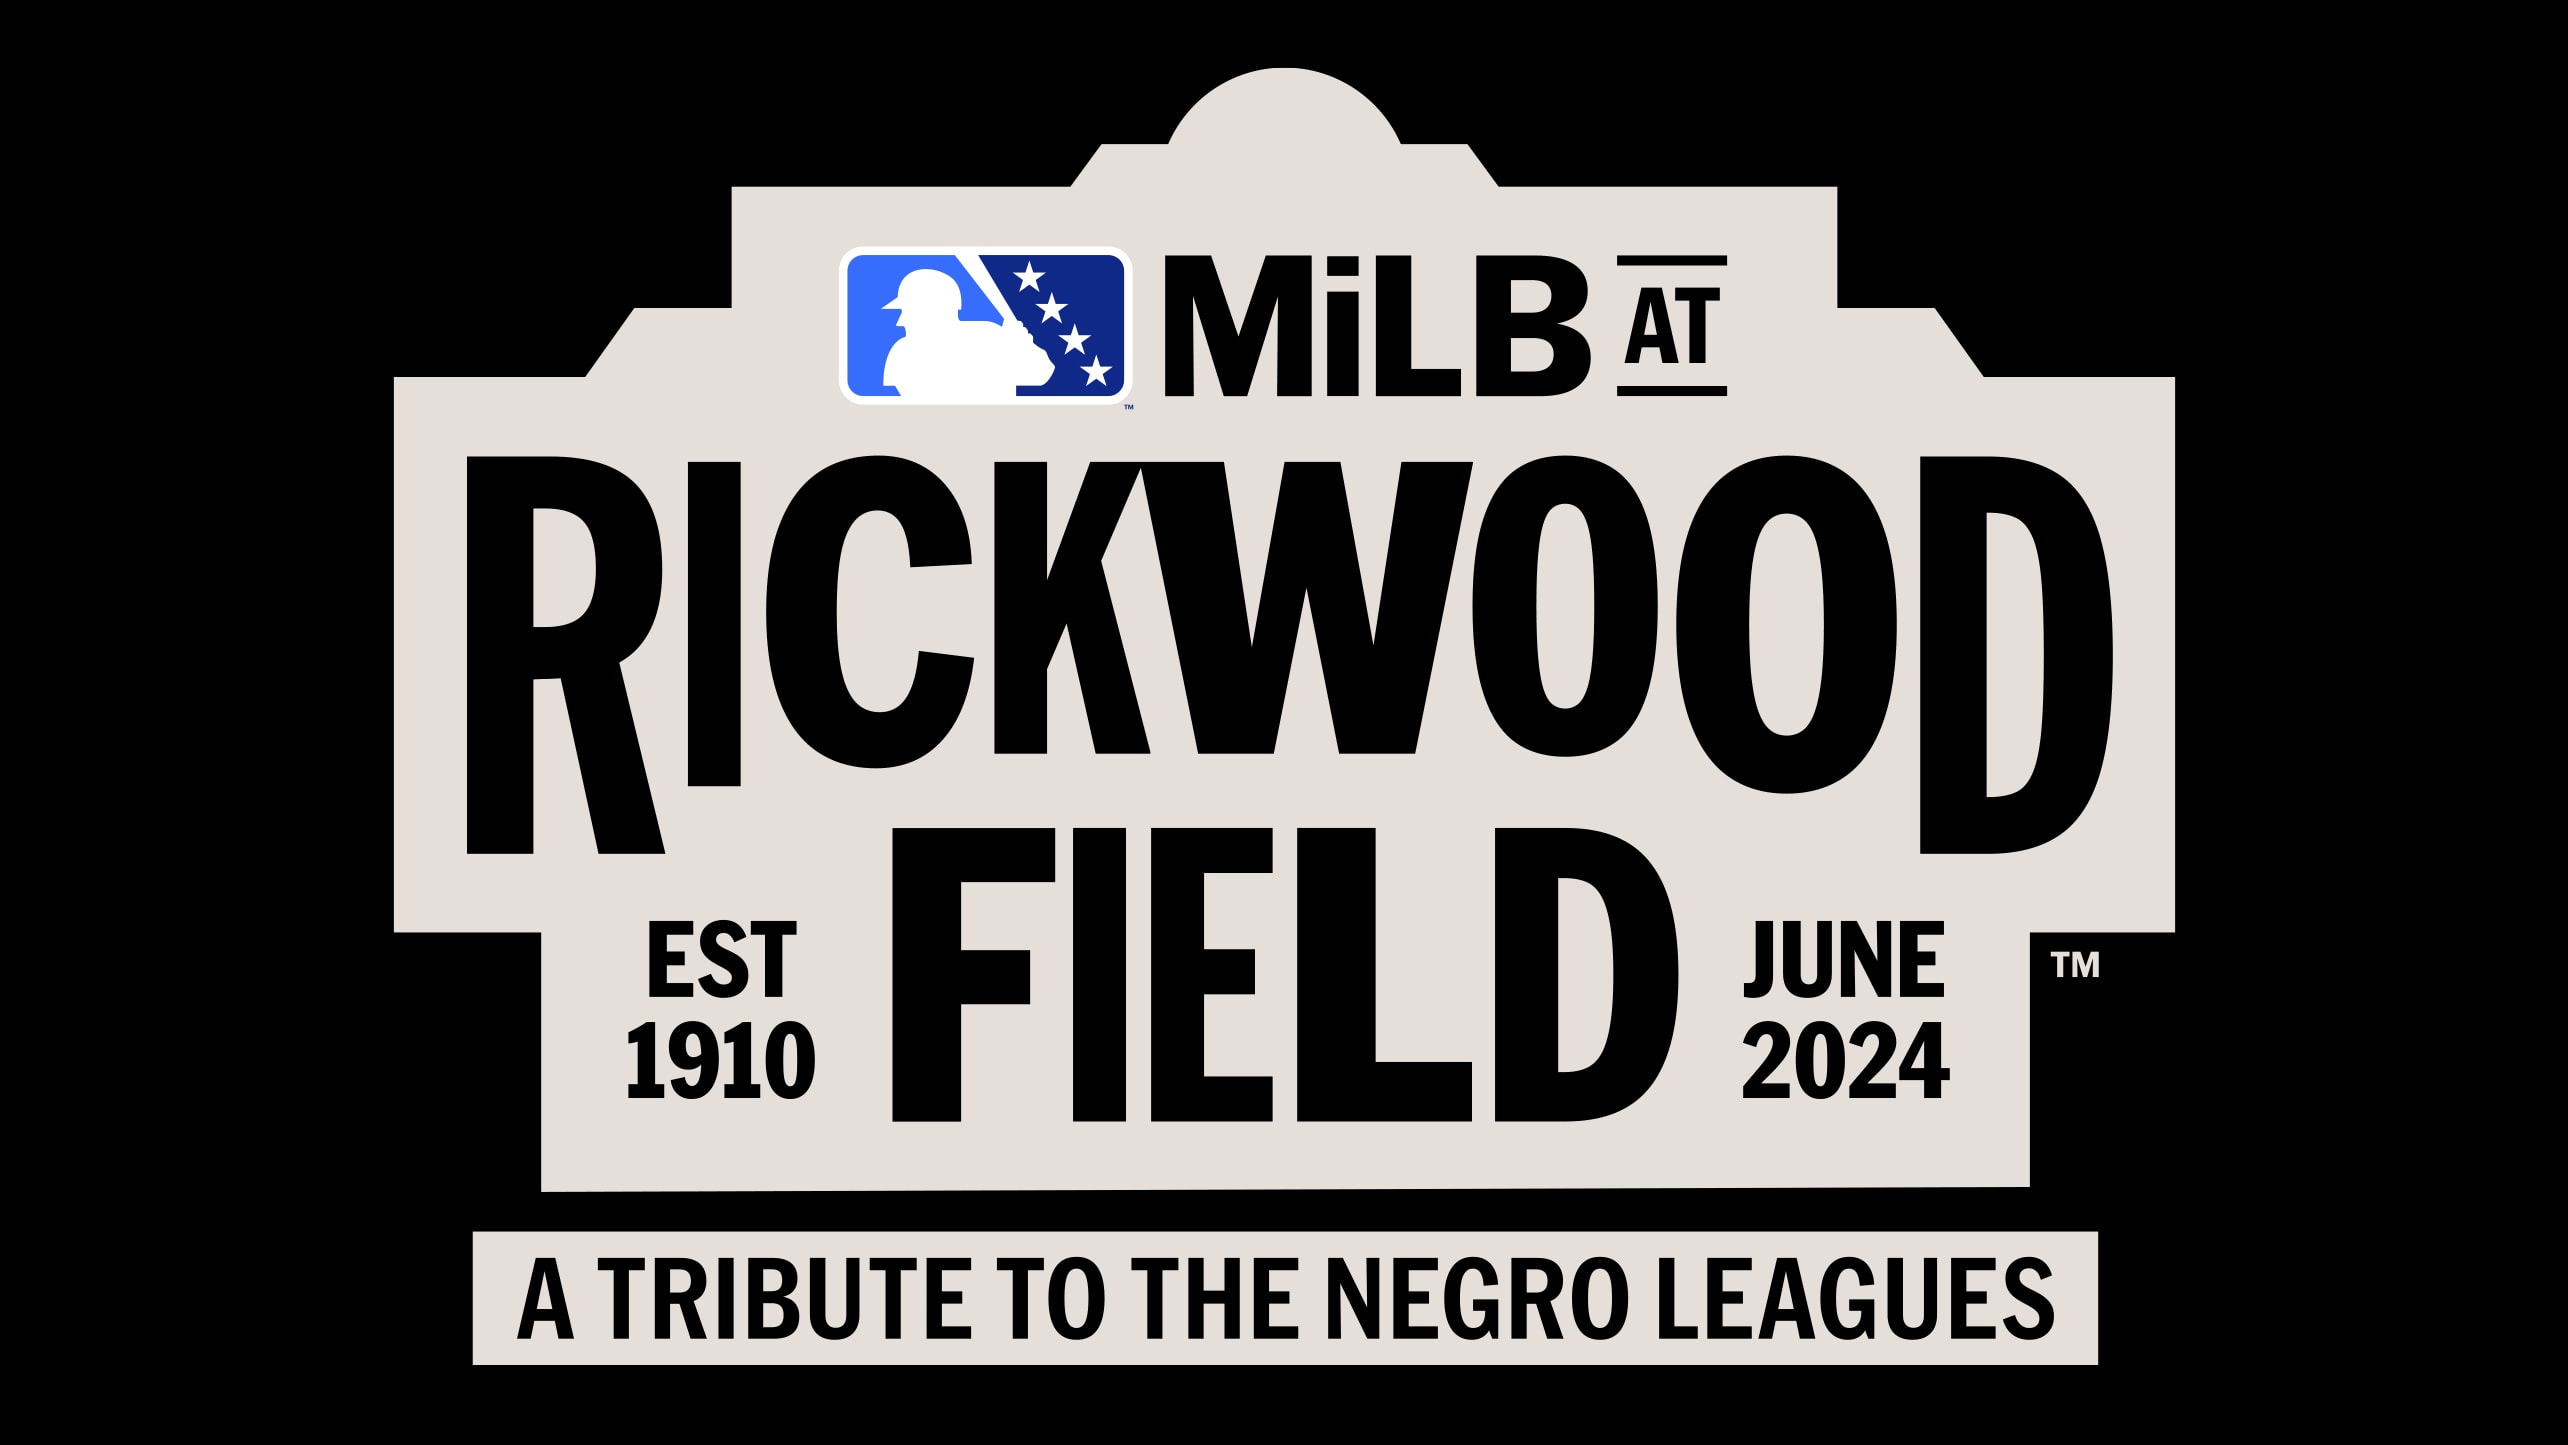 MiLB at Rickwood Field on MLB Network